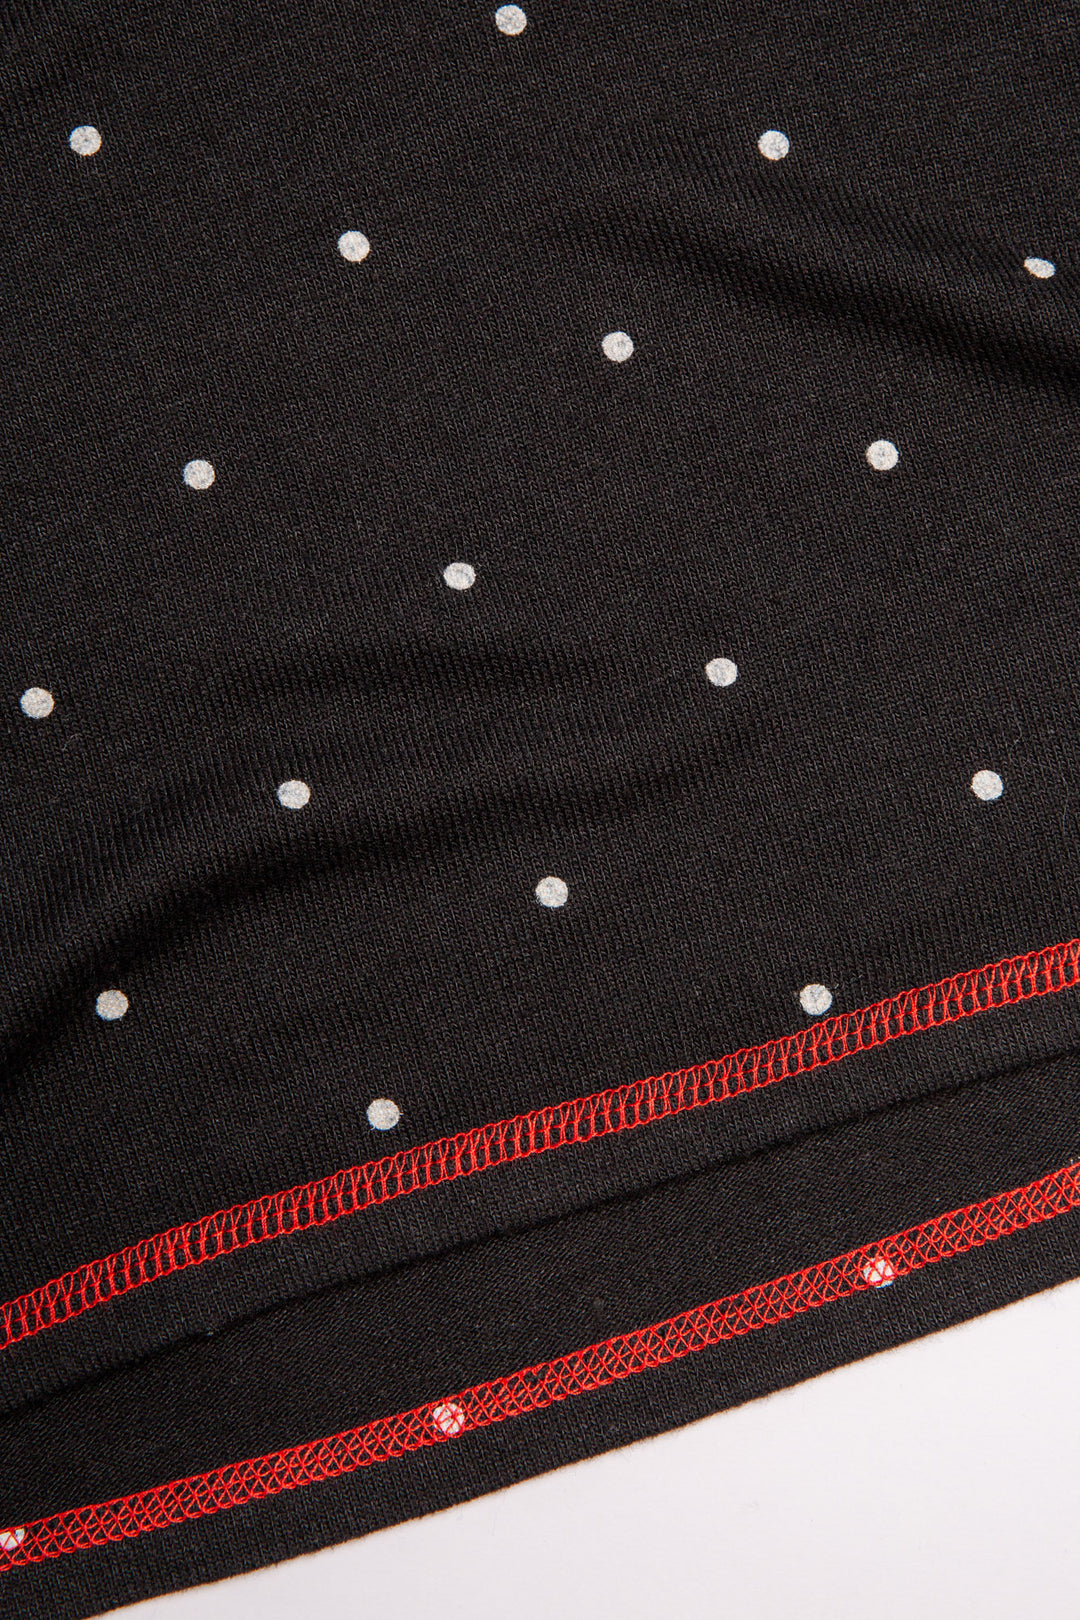 Black pajama set in matching gift bag. Dot-print top & pj pant & red /ribbon tie, in Repreve soft knit. (7200024297572)